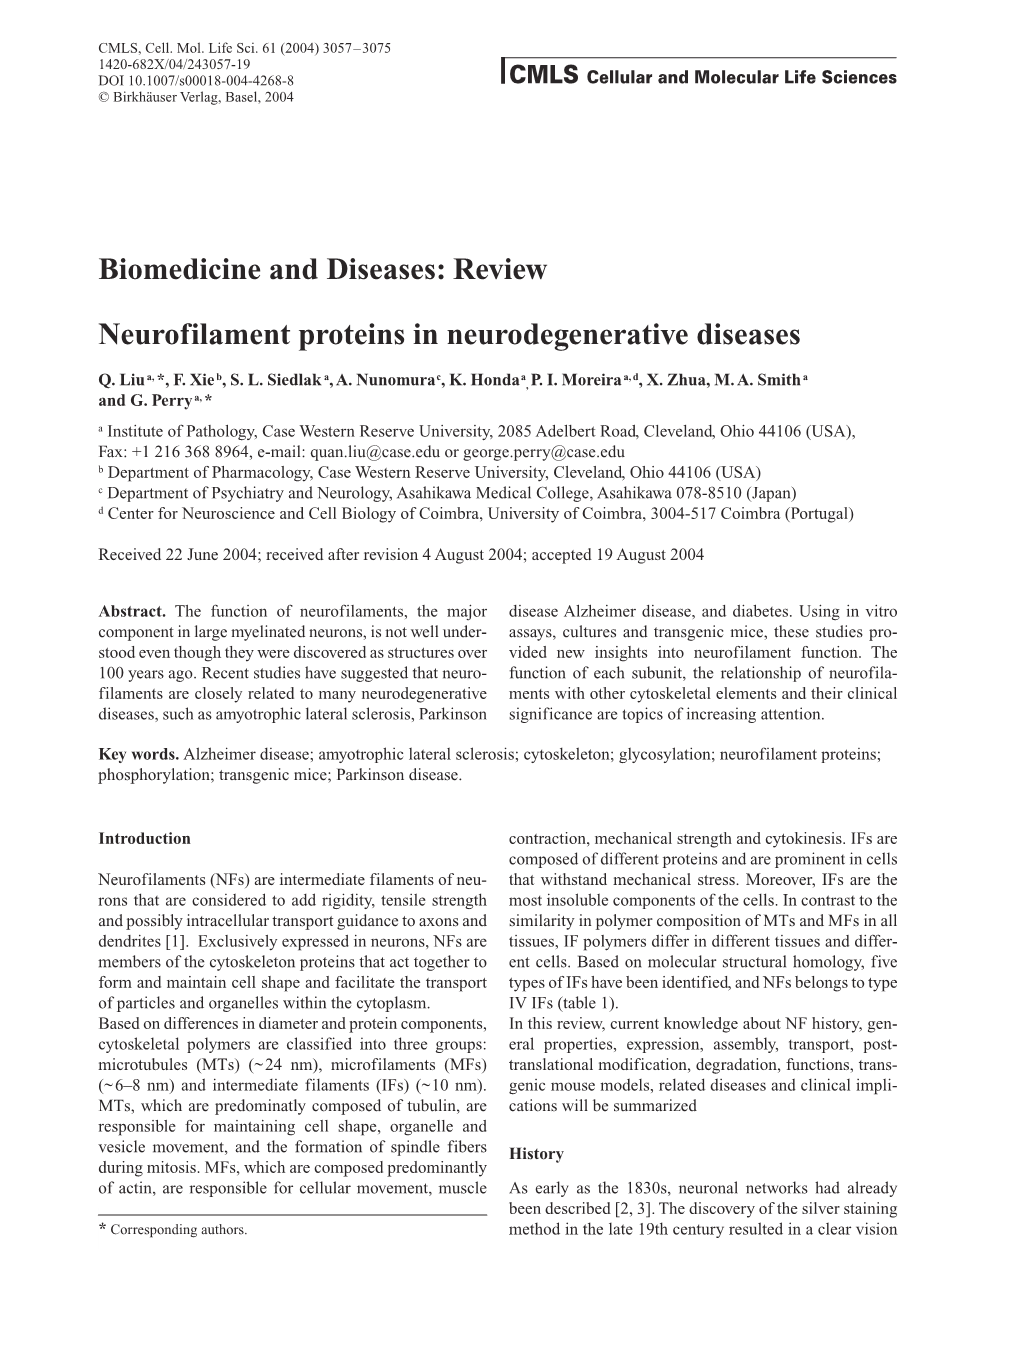 Review Neurofilament Proteins in Neurodegenerative Diseases